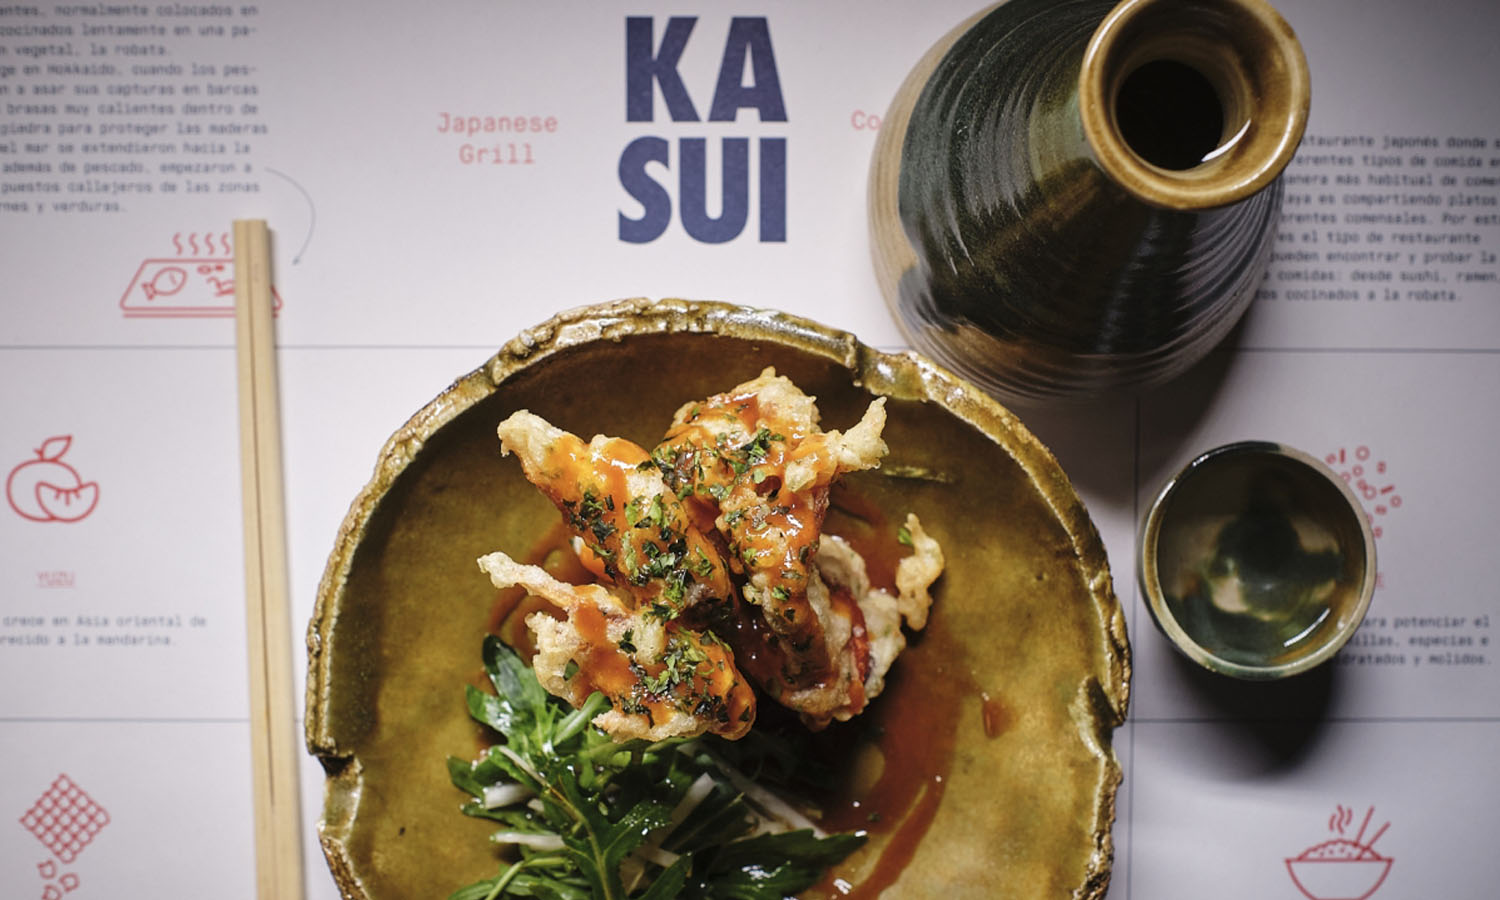 kasui Best Asian restaurants in Palma nakar hotel